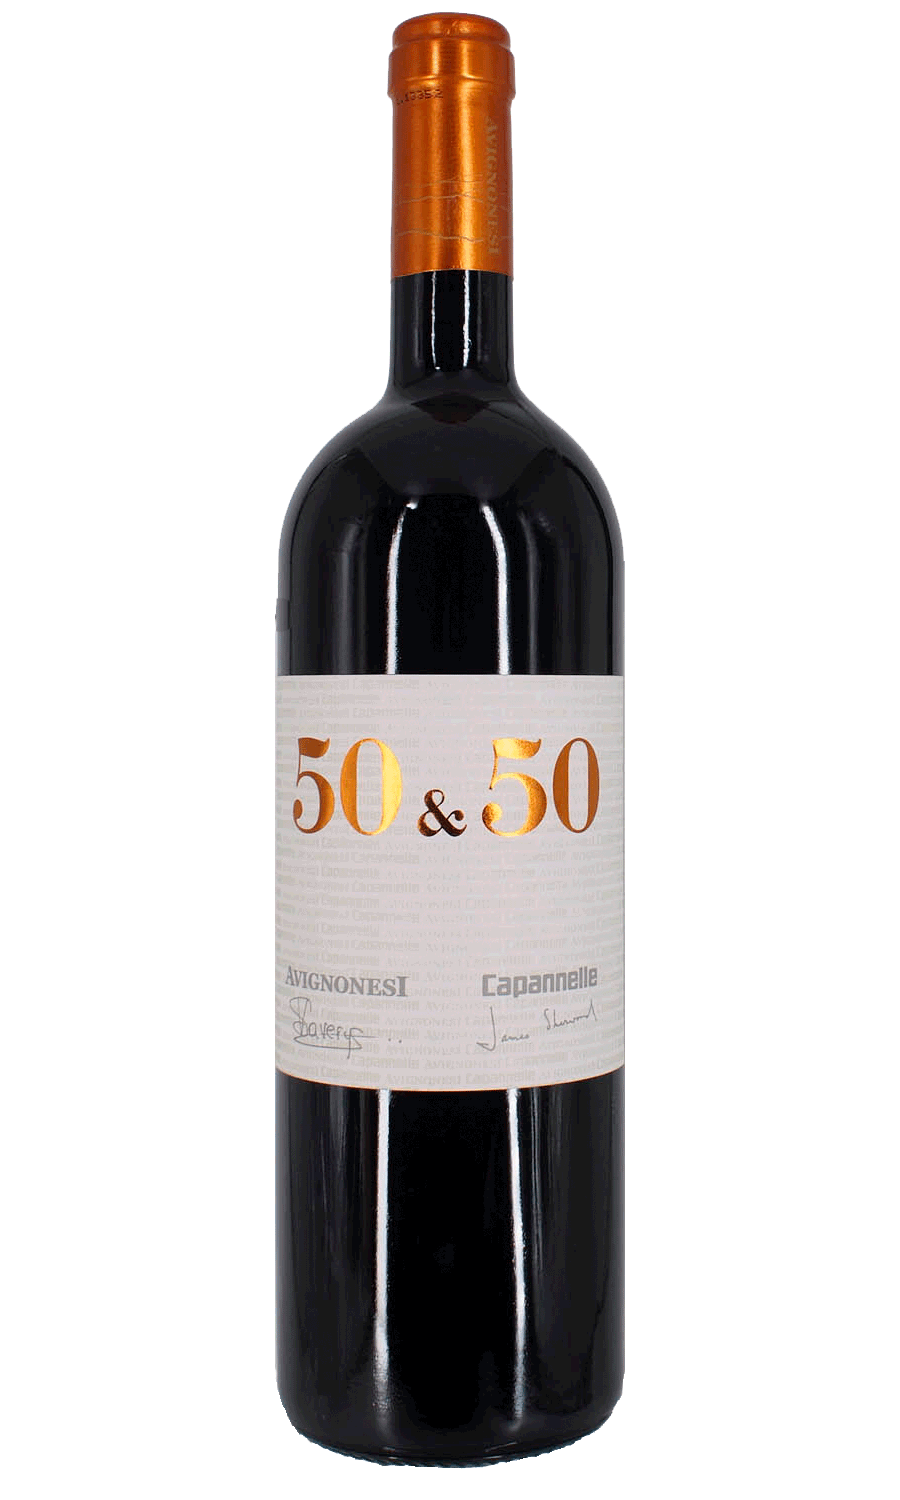 Avignonesi "50 & 50" 2009